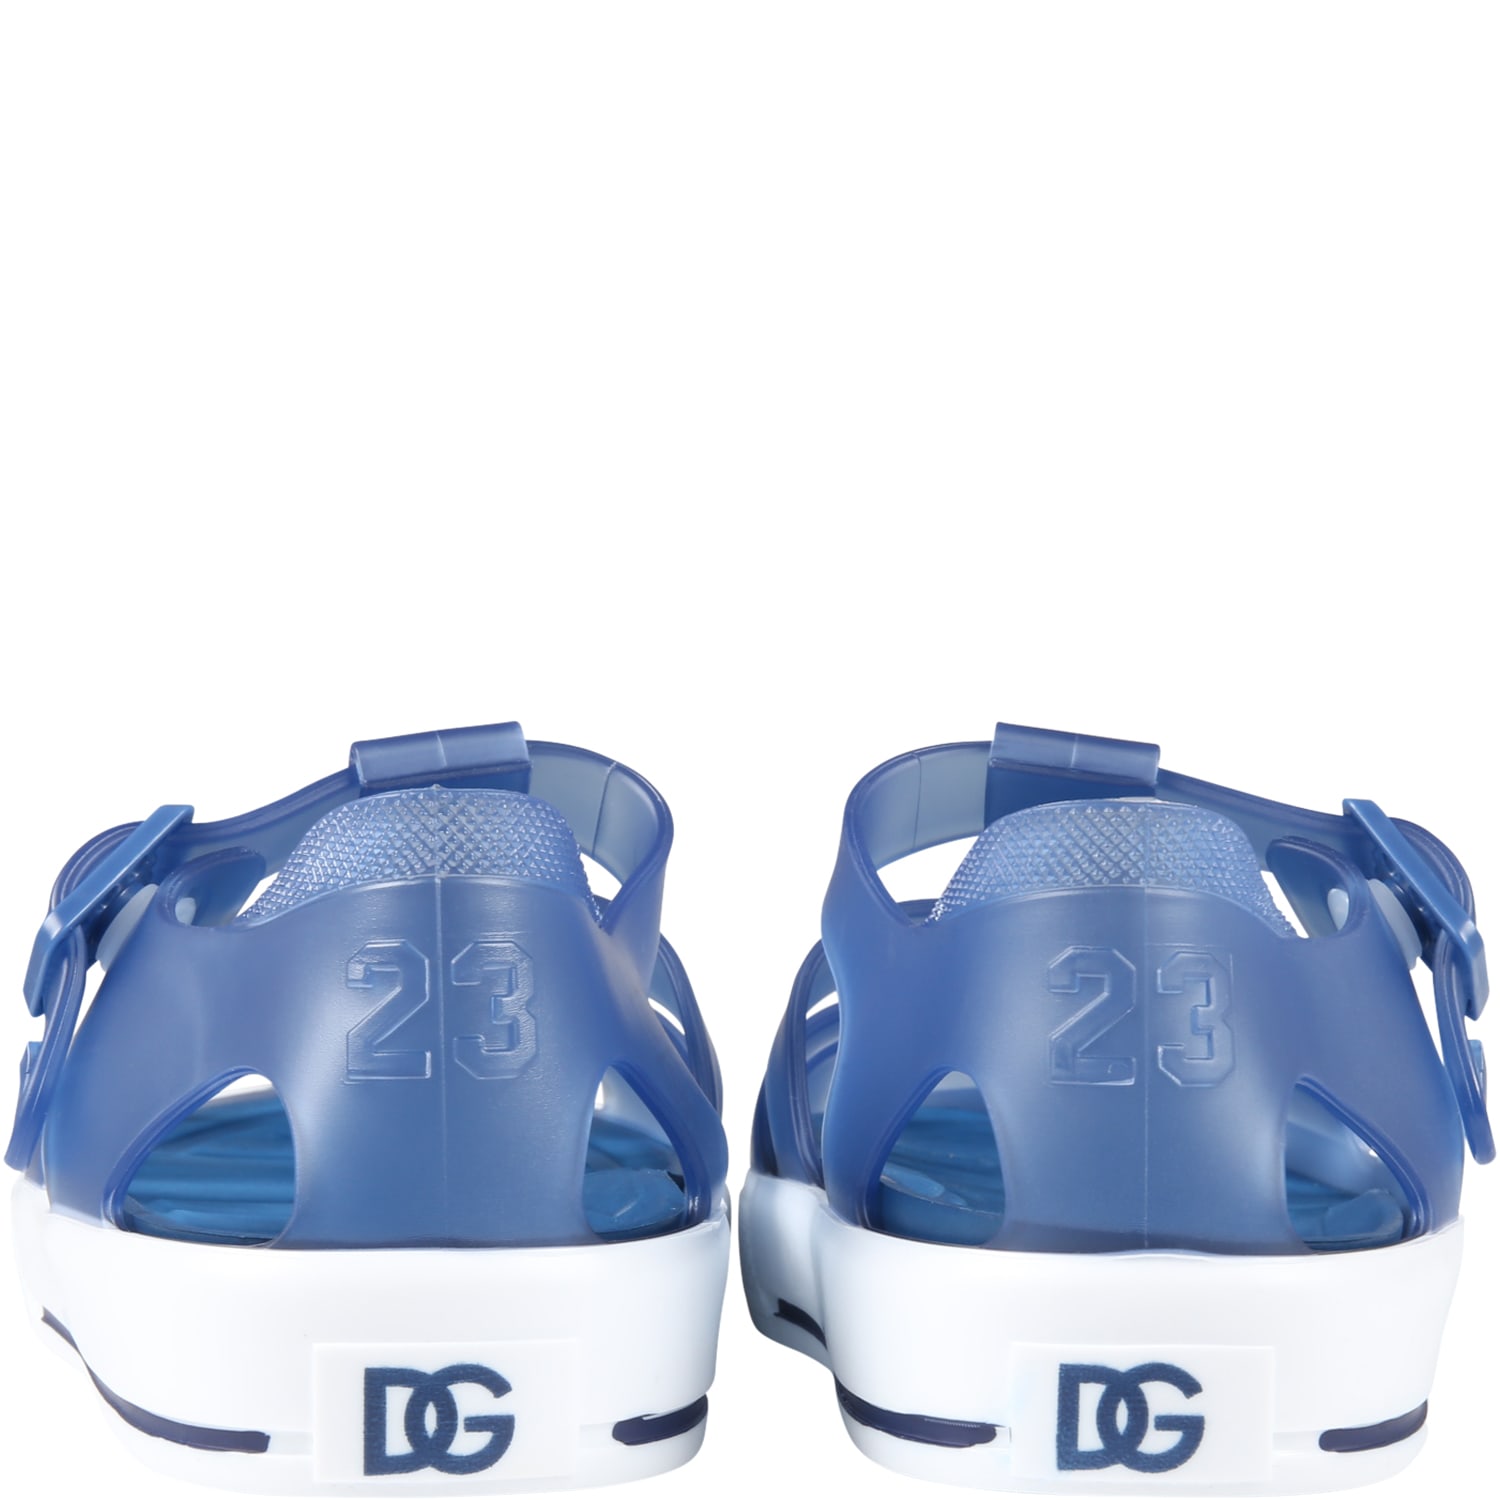 Shop Dolce & Gabbana Blue Sandals For Kids With Logo